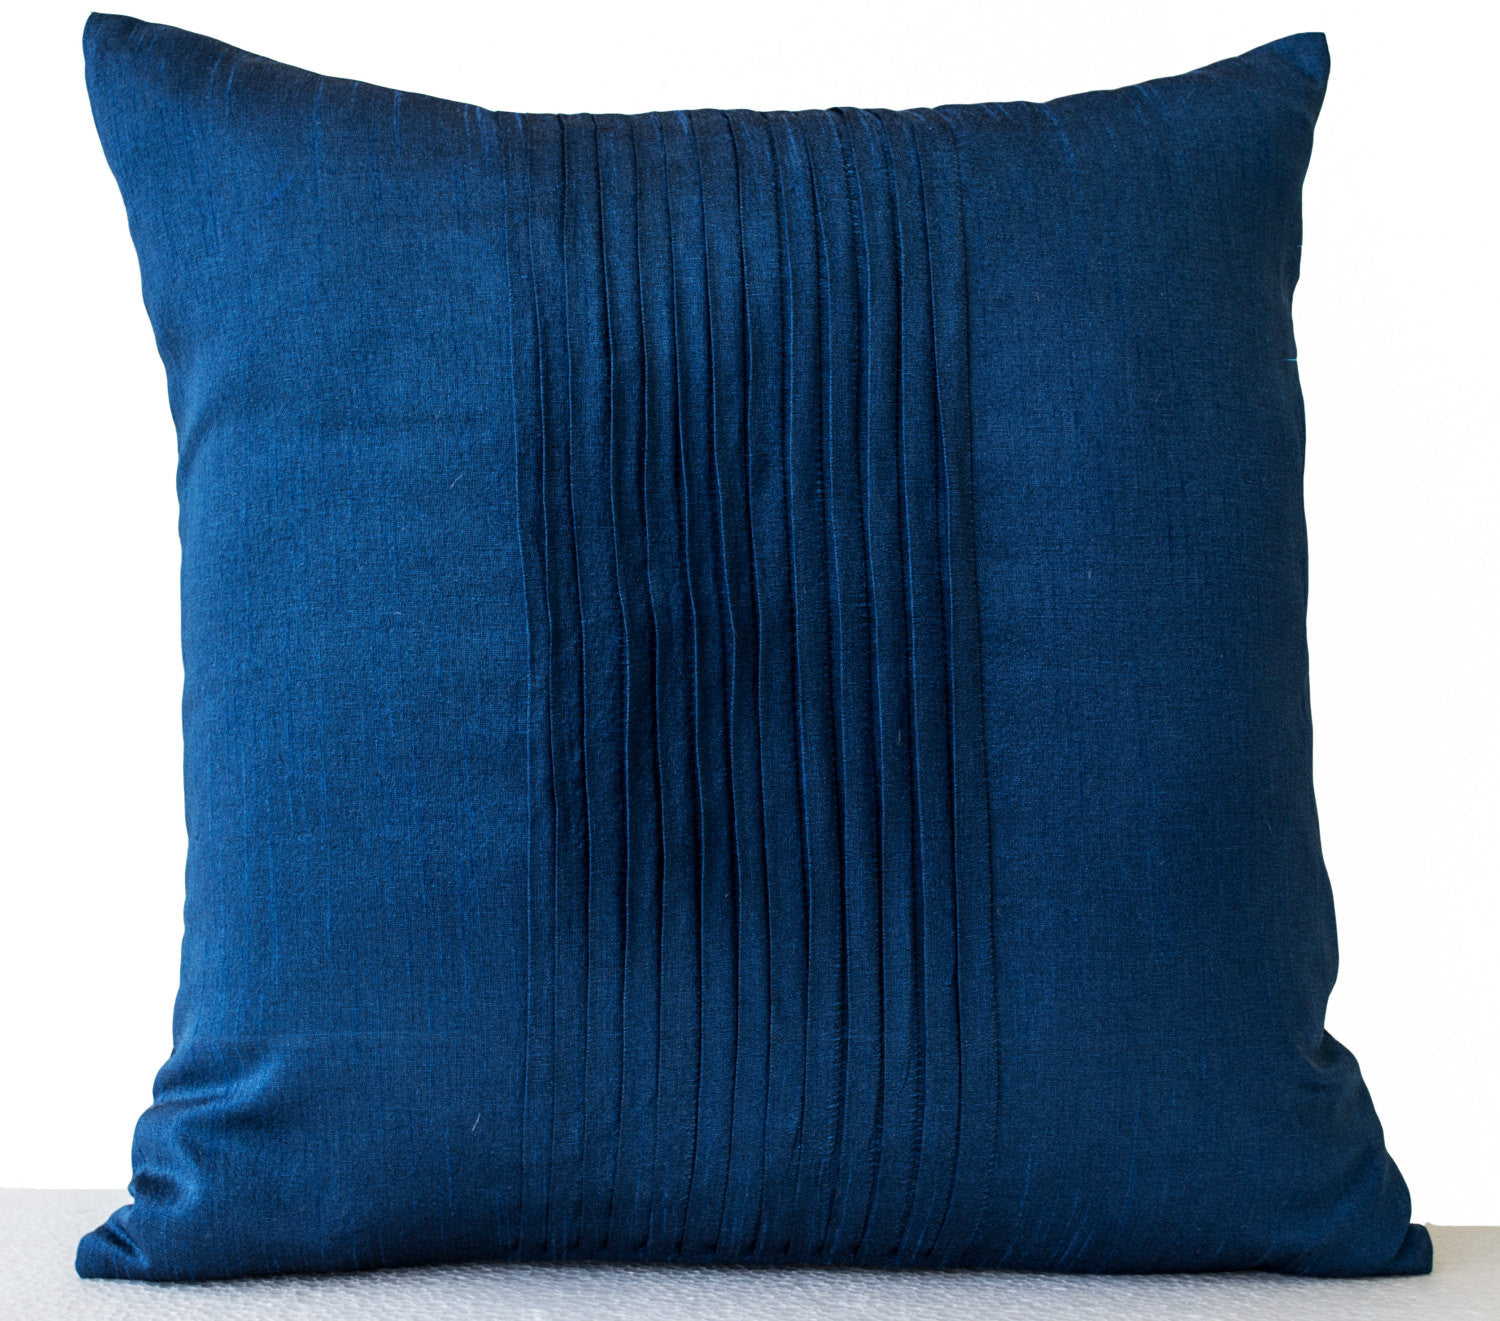 Handmade dark blue silk throw pillow with rippled pin tuck pattern